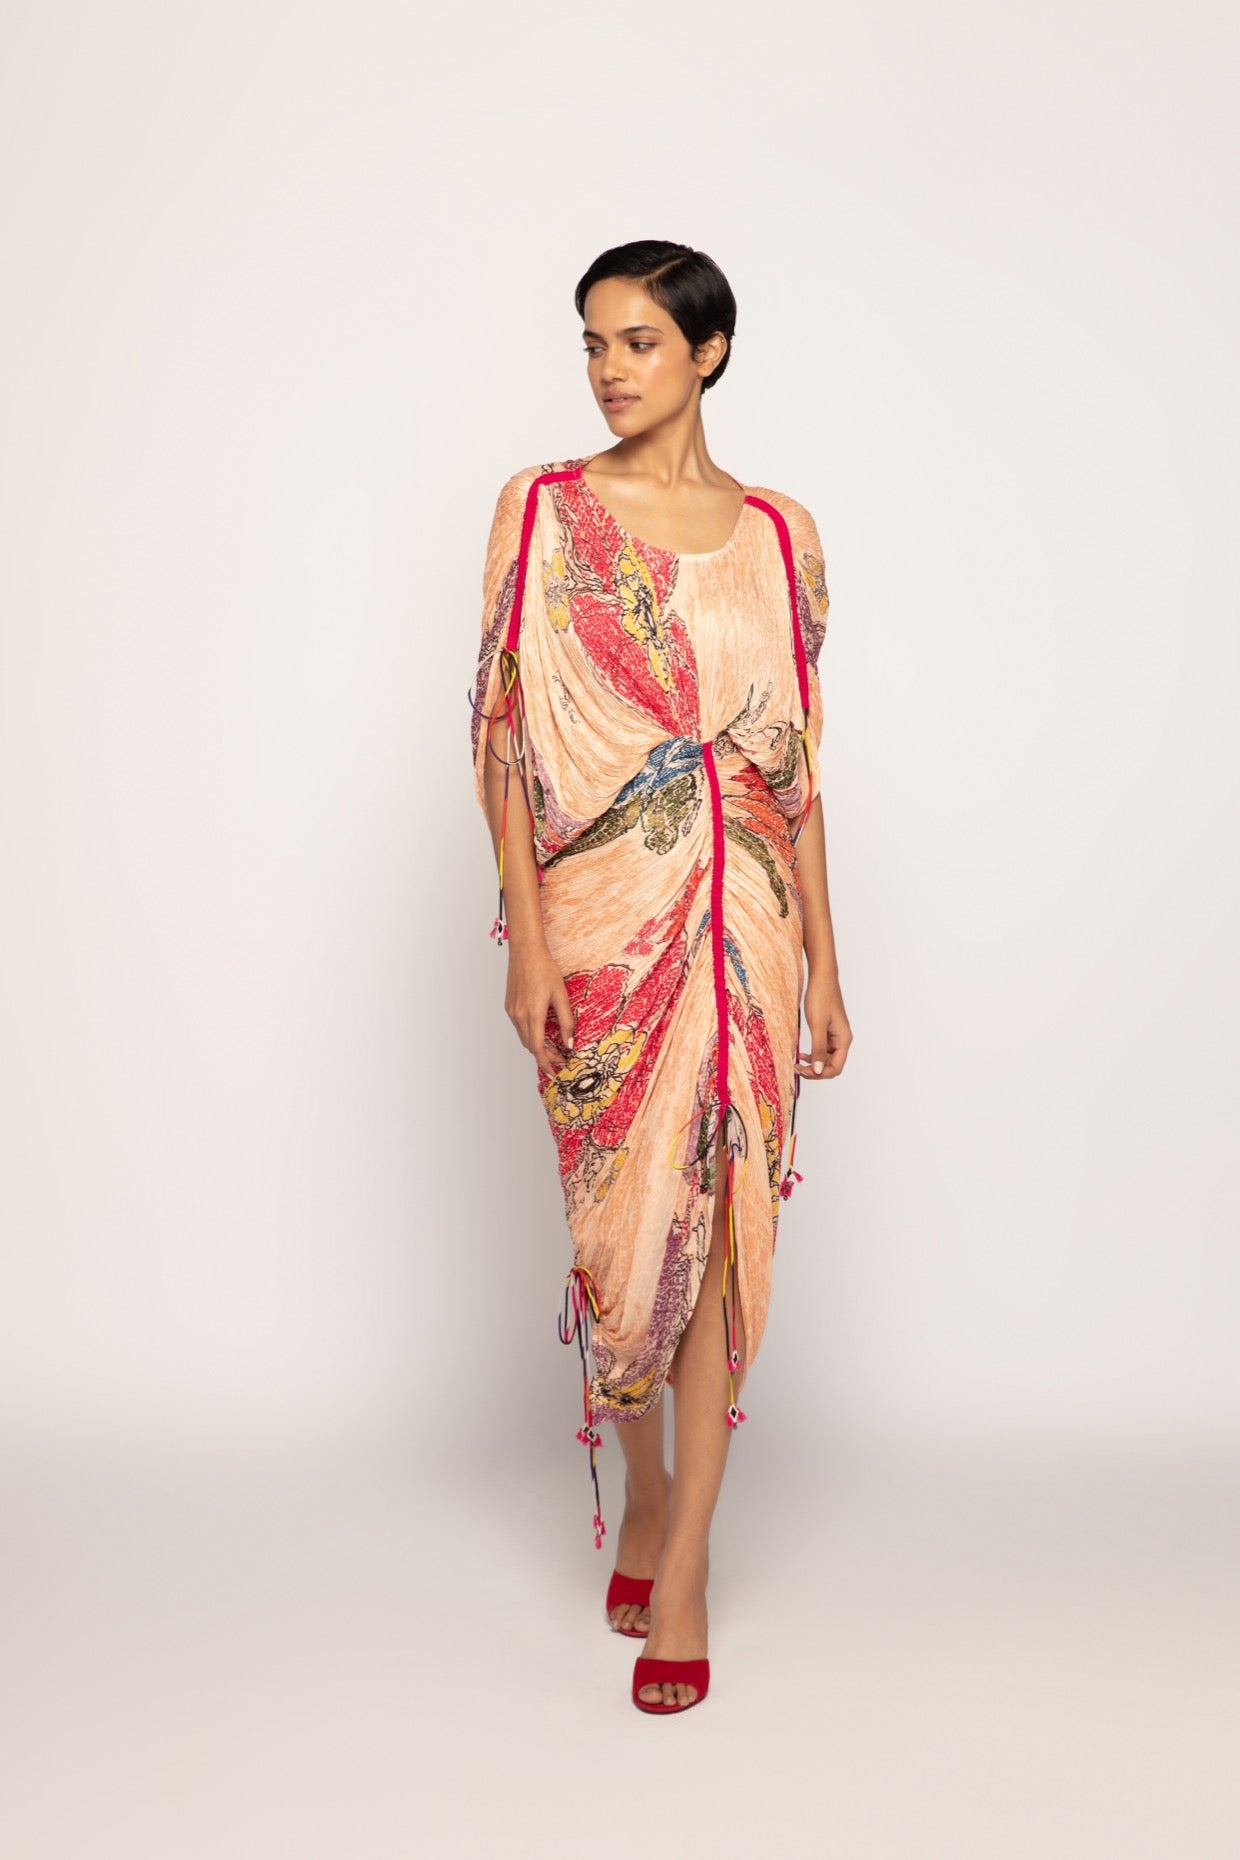 Periwinkle Bandhani Print Two Shoulder, Hand Micro Pleated Sari Style Dress